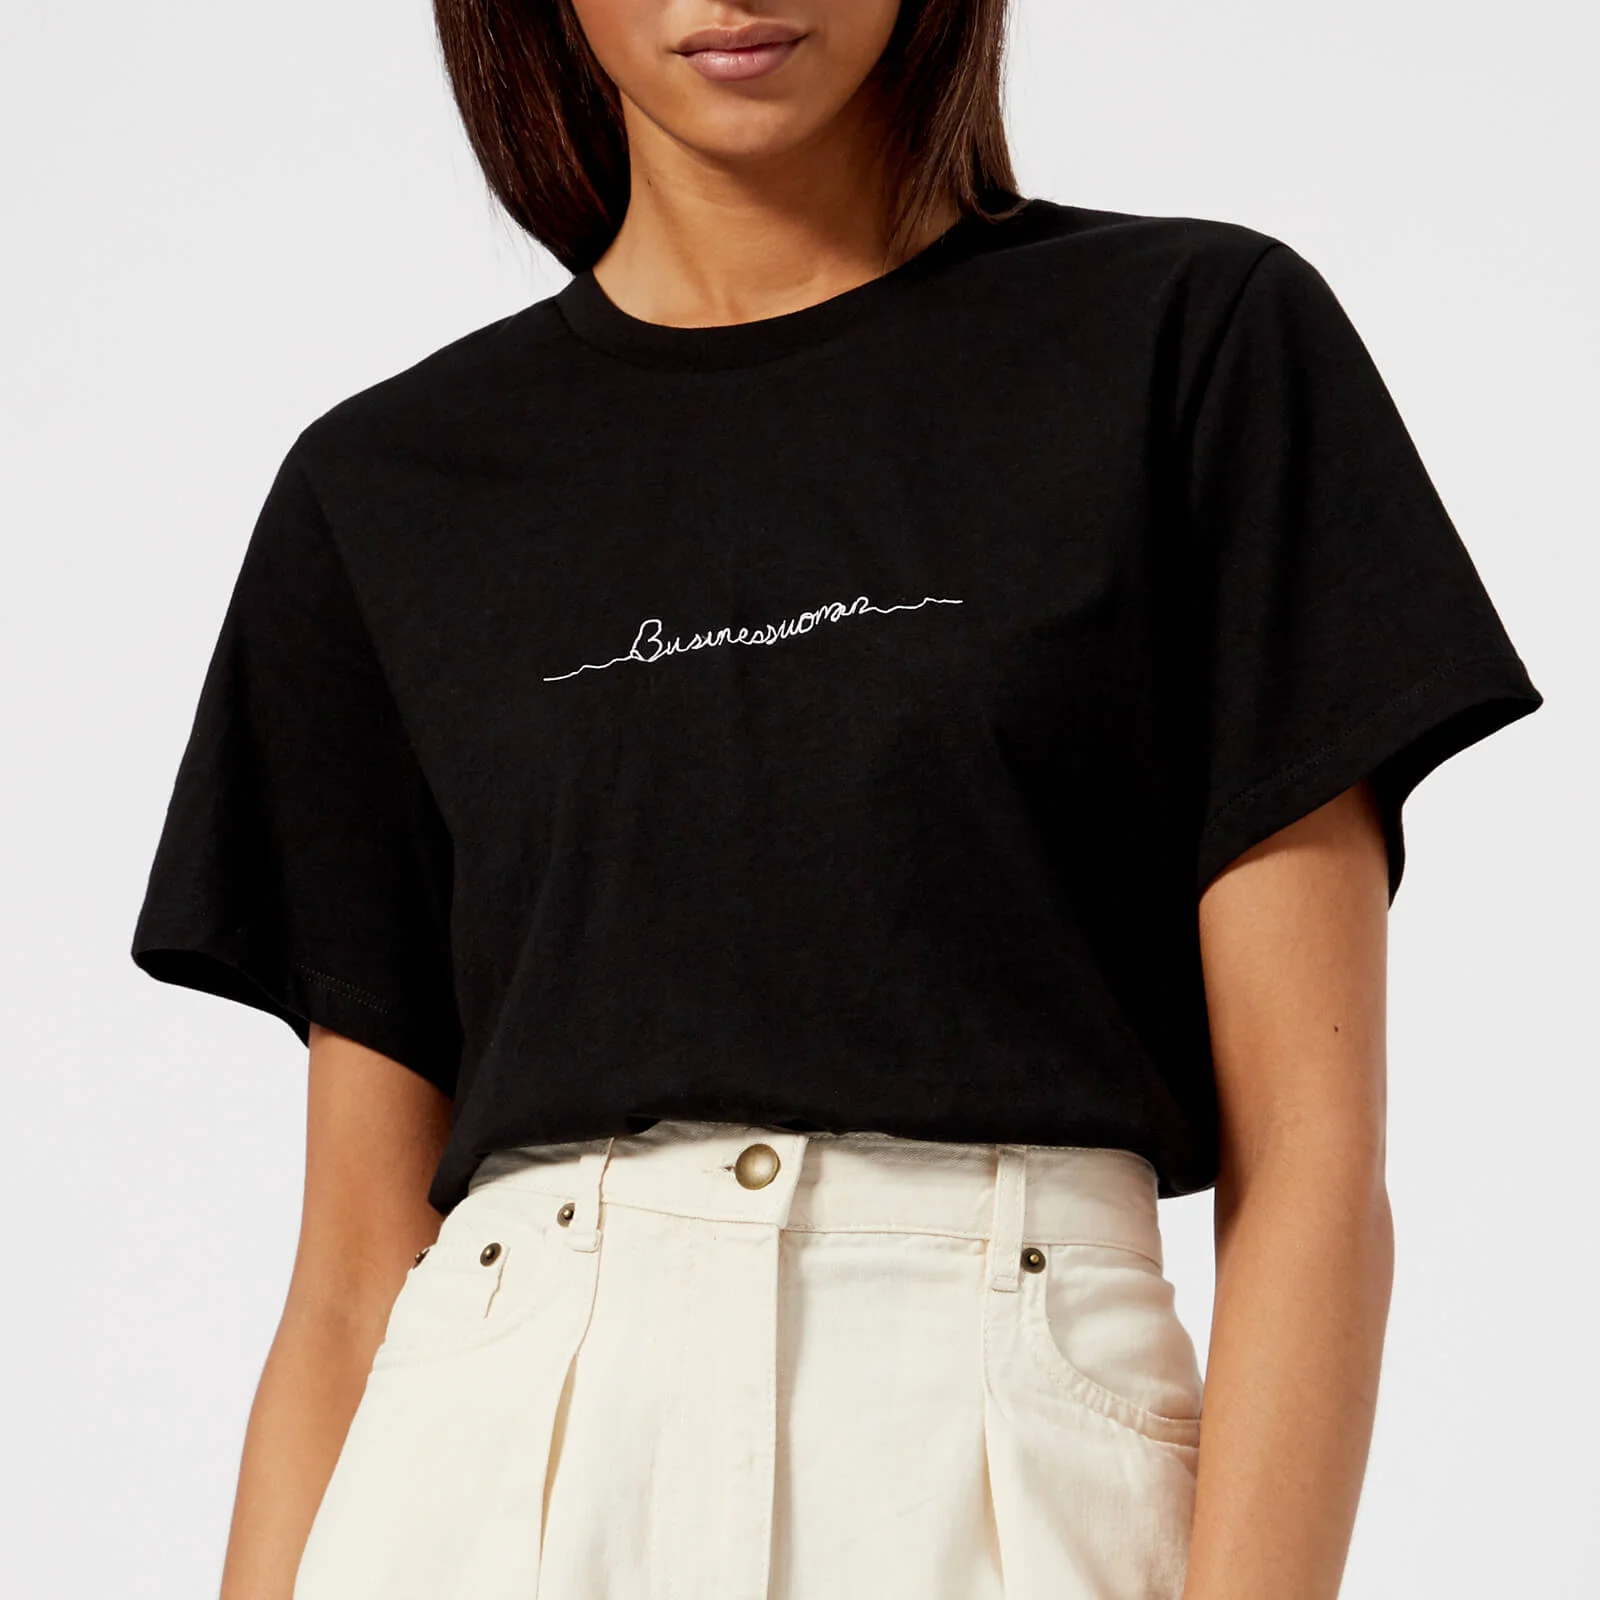 Rejina Pyo Women's Erin Business Woman T-Shirt - Black Image 1